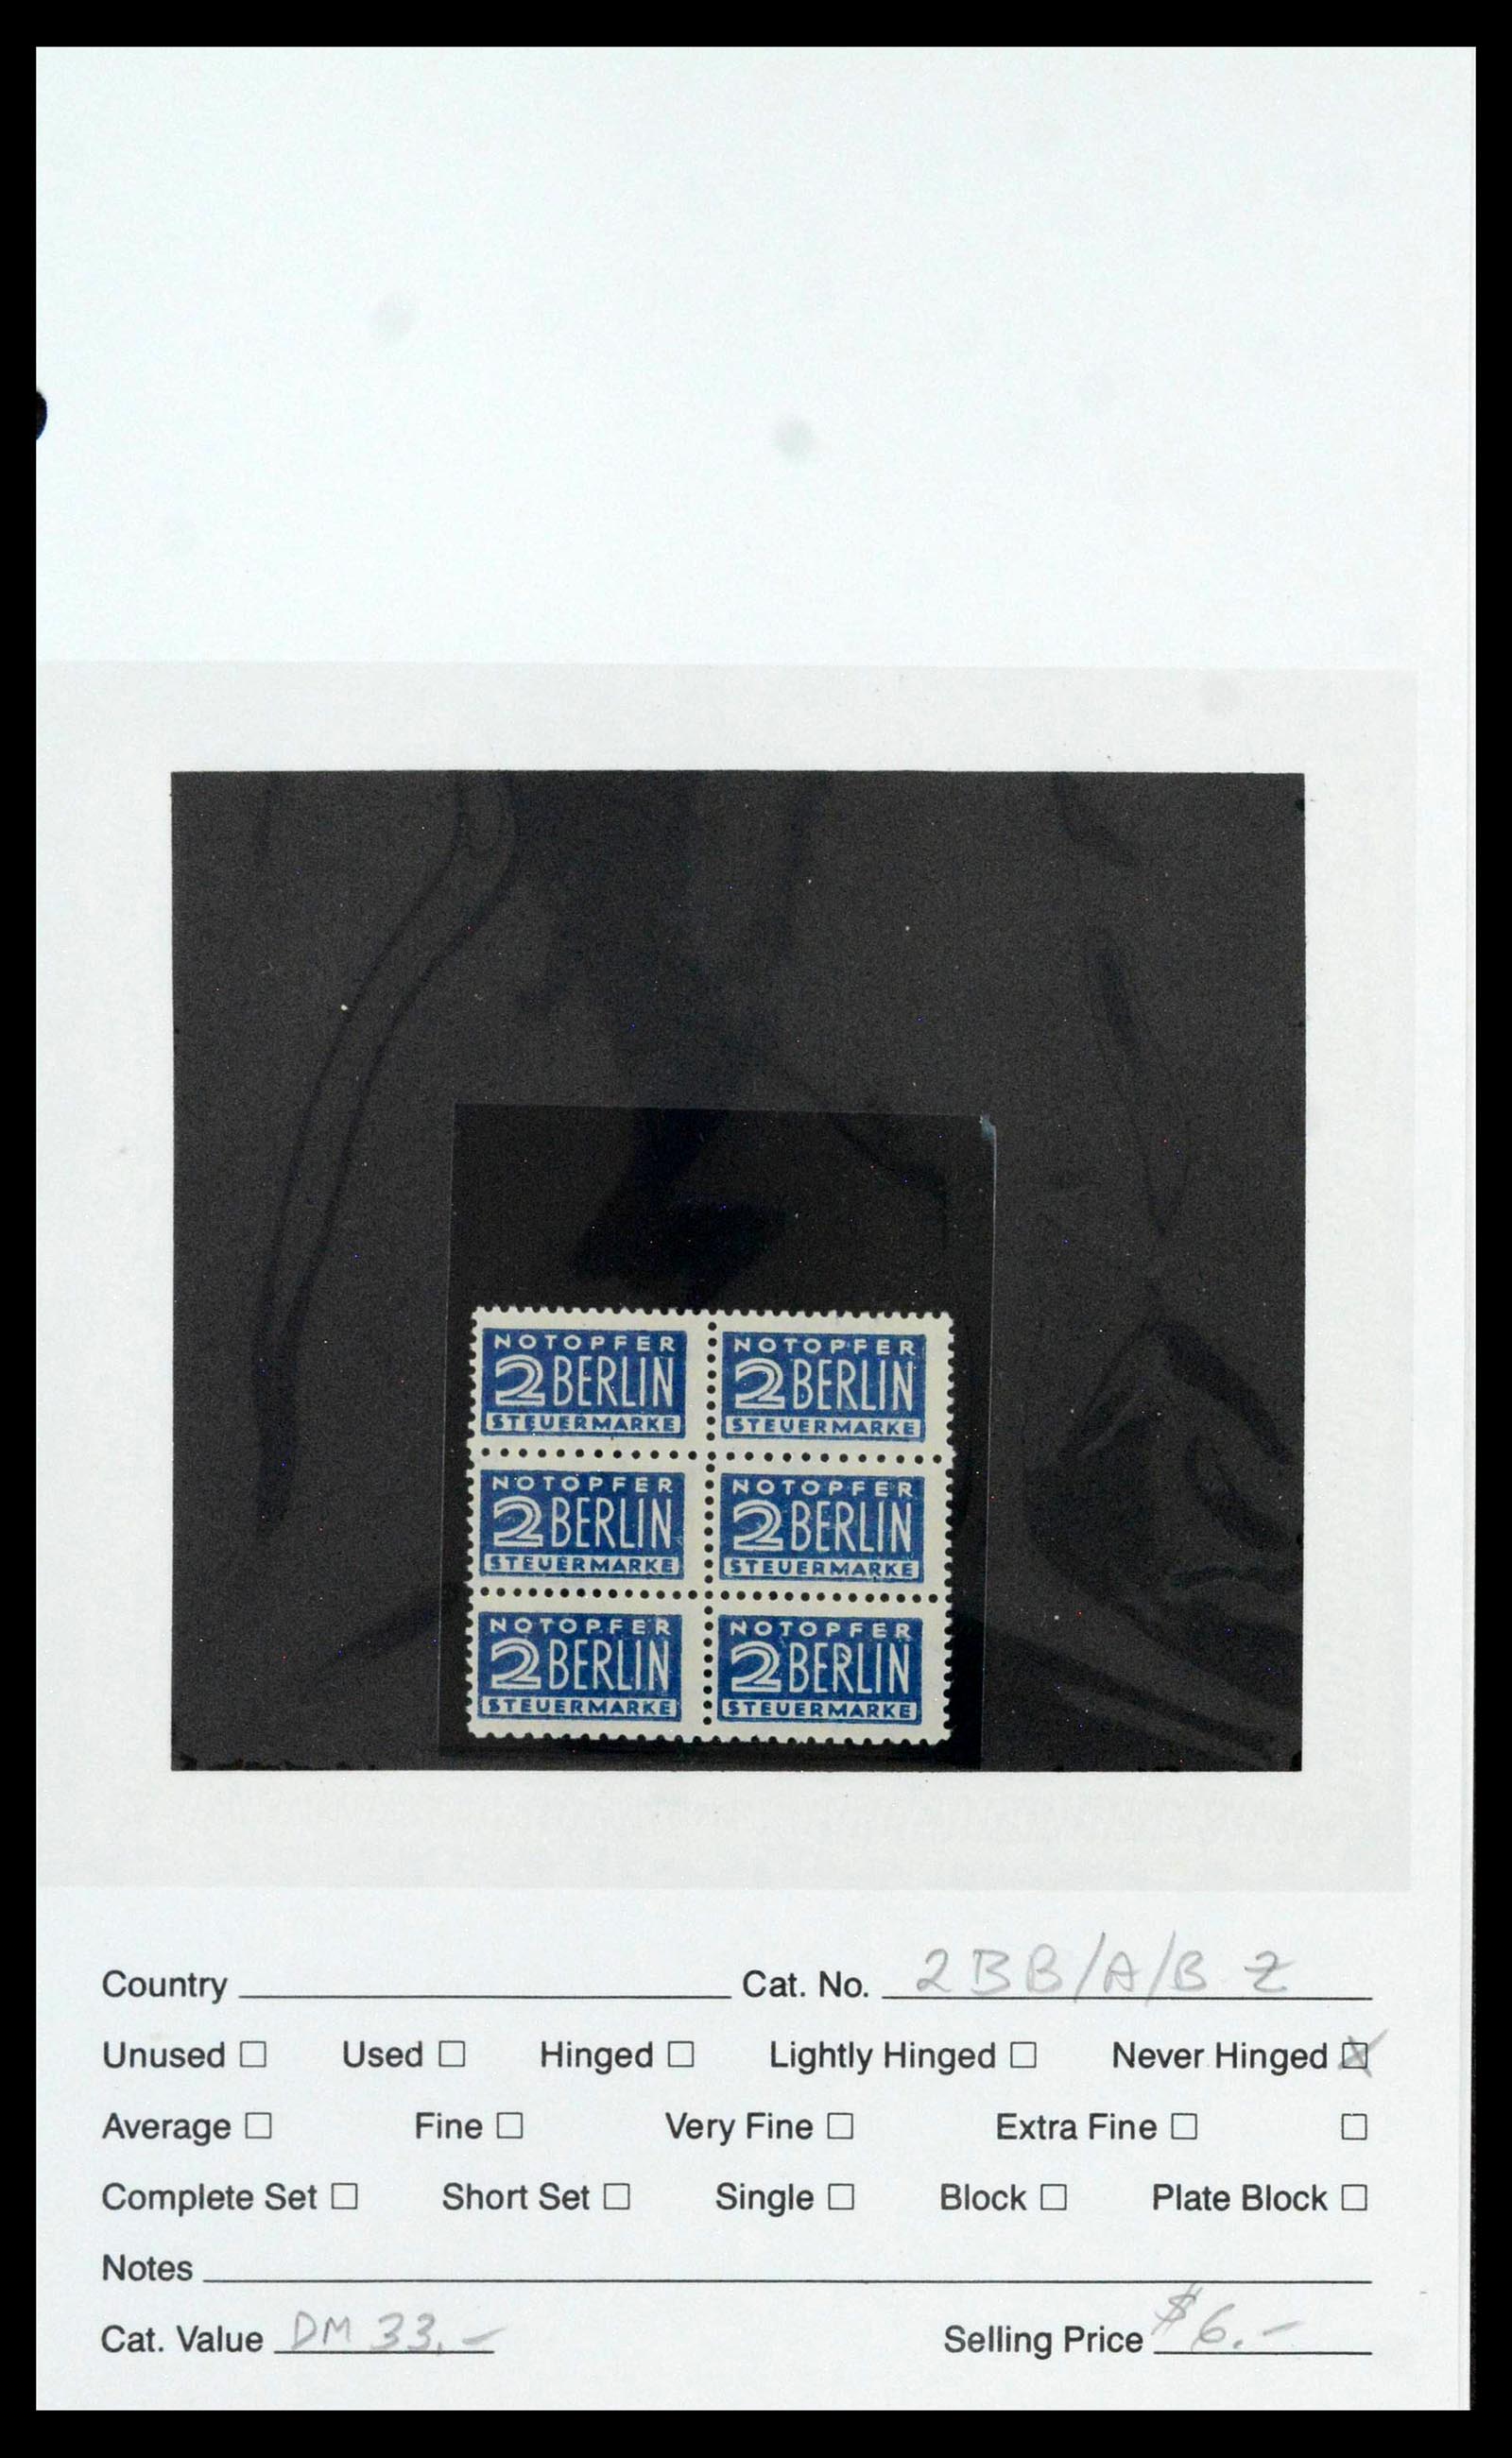 39459 0017 - Stamp collection 39459 Berlin notopfer 1948-1949.